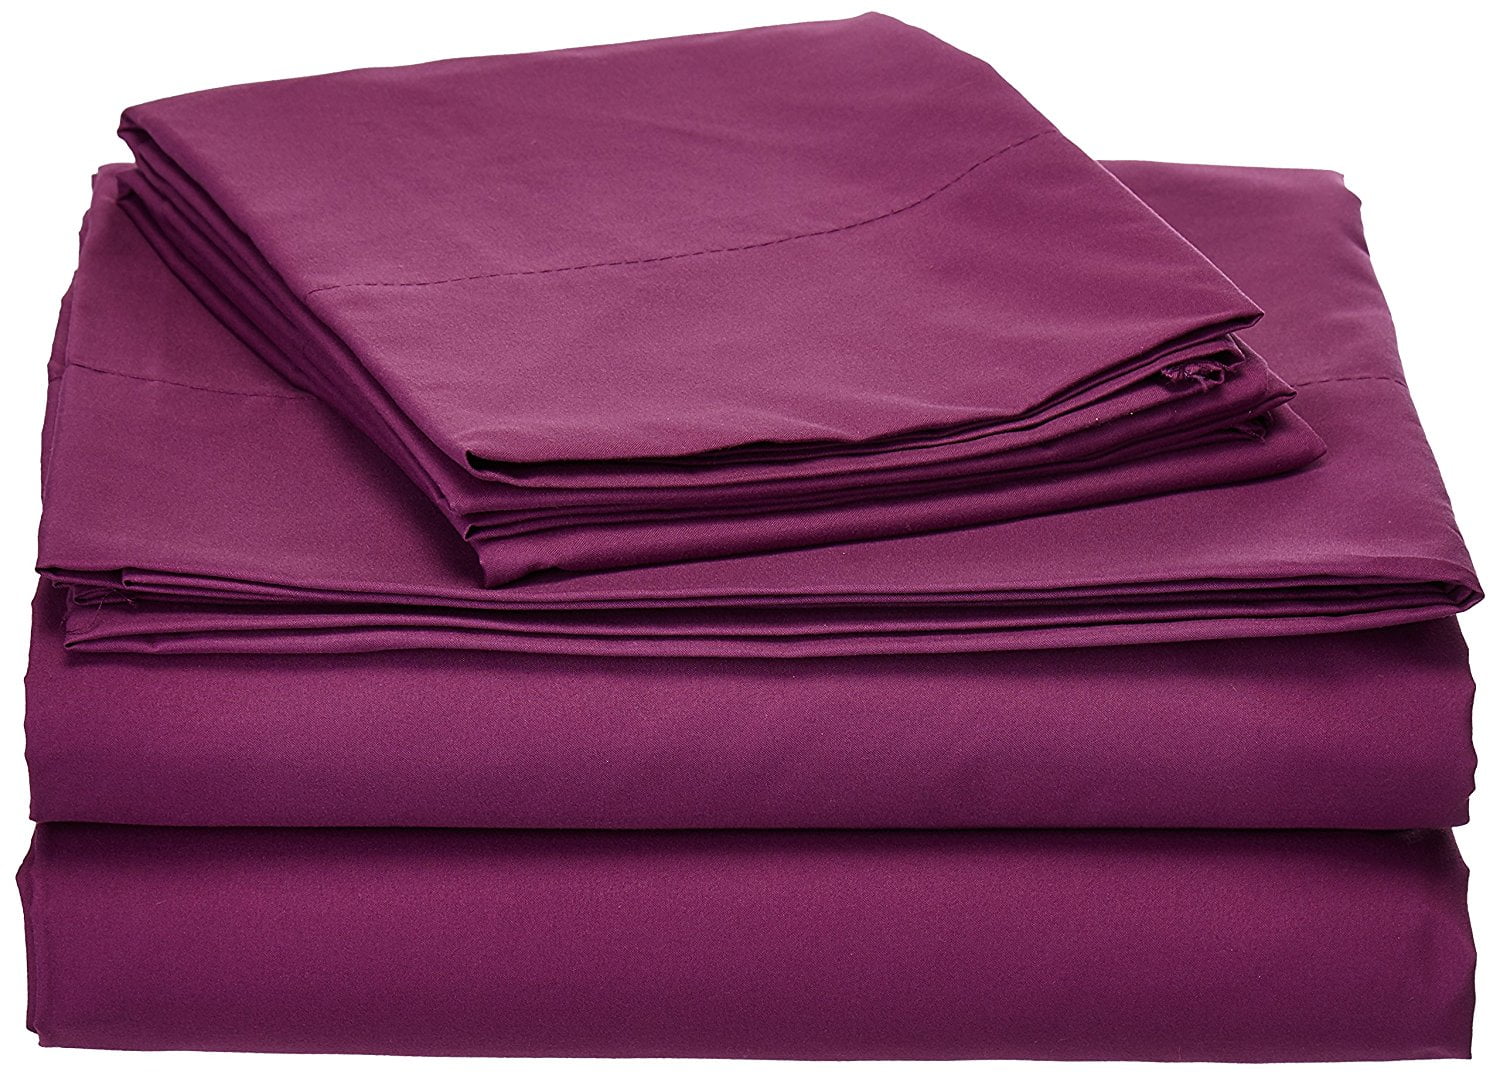 microfiber sheets with purple mattress